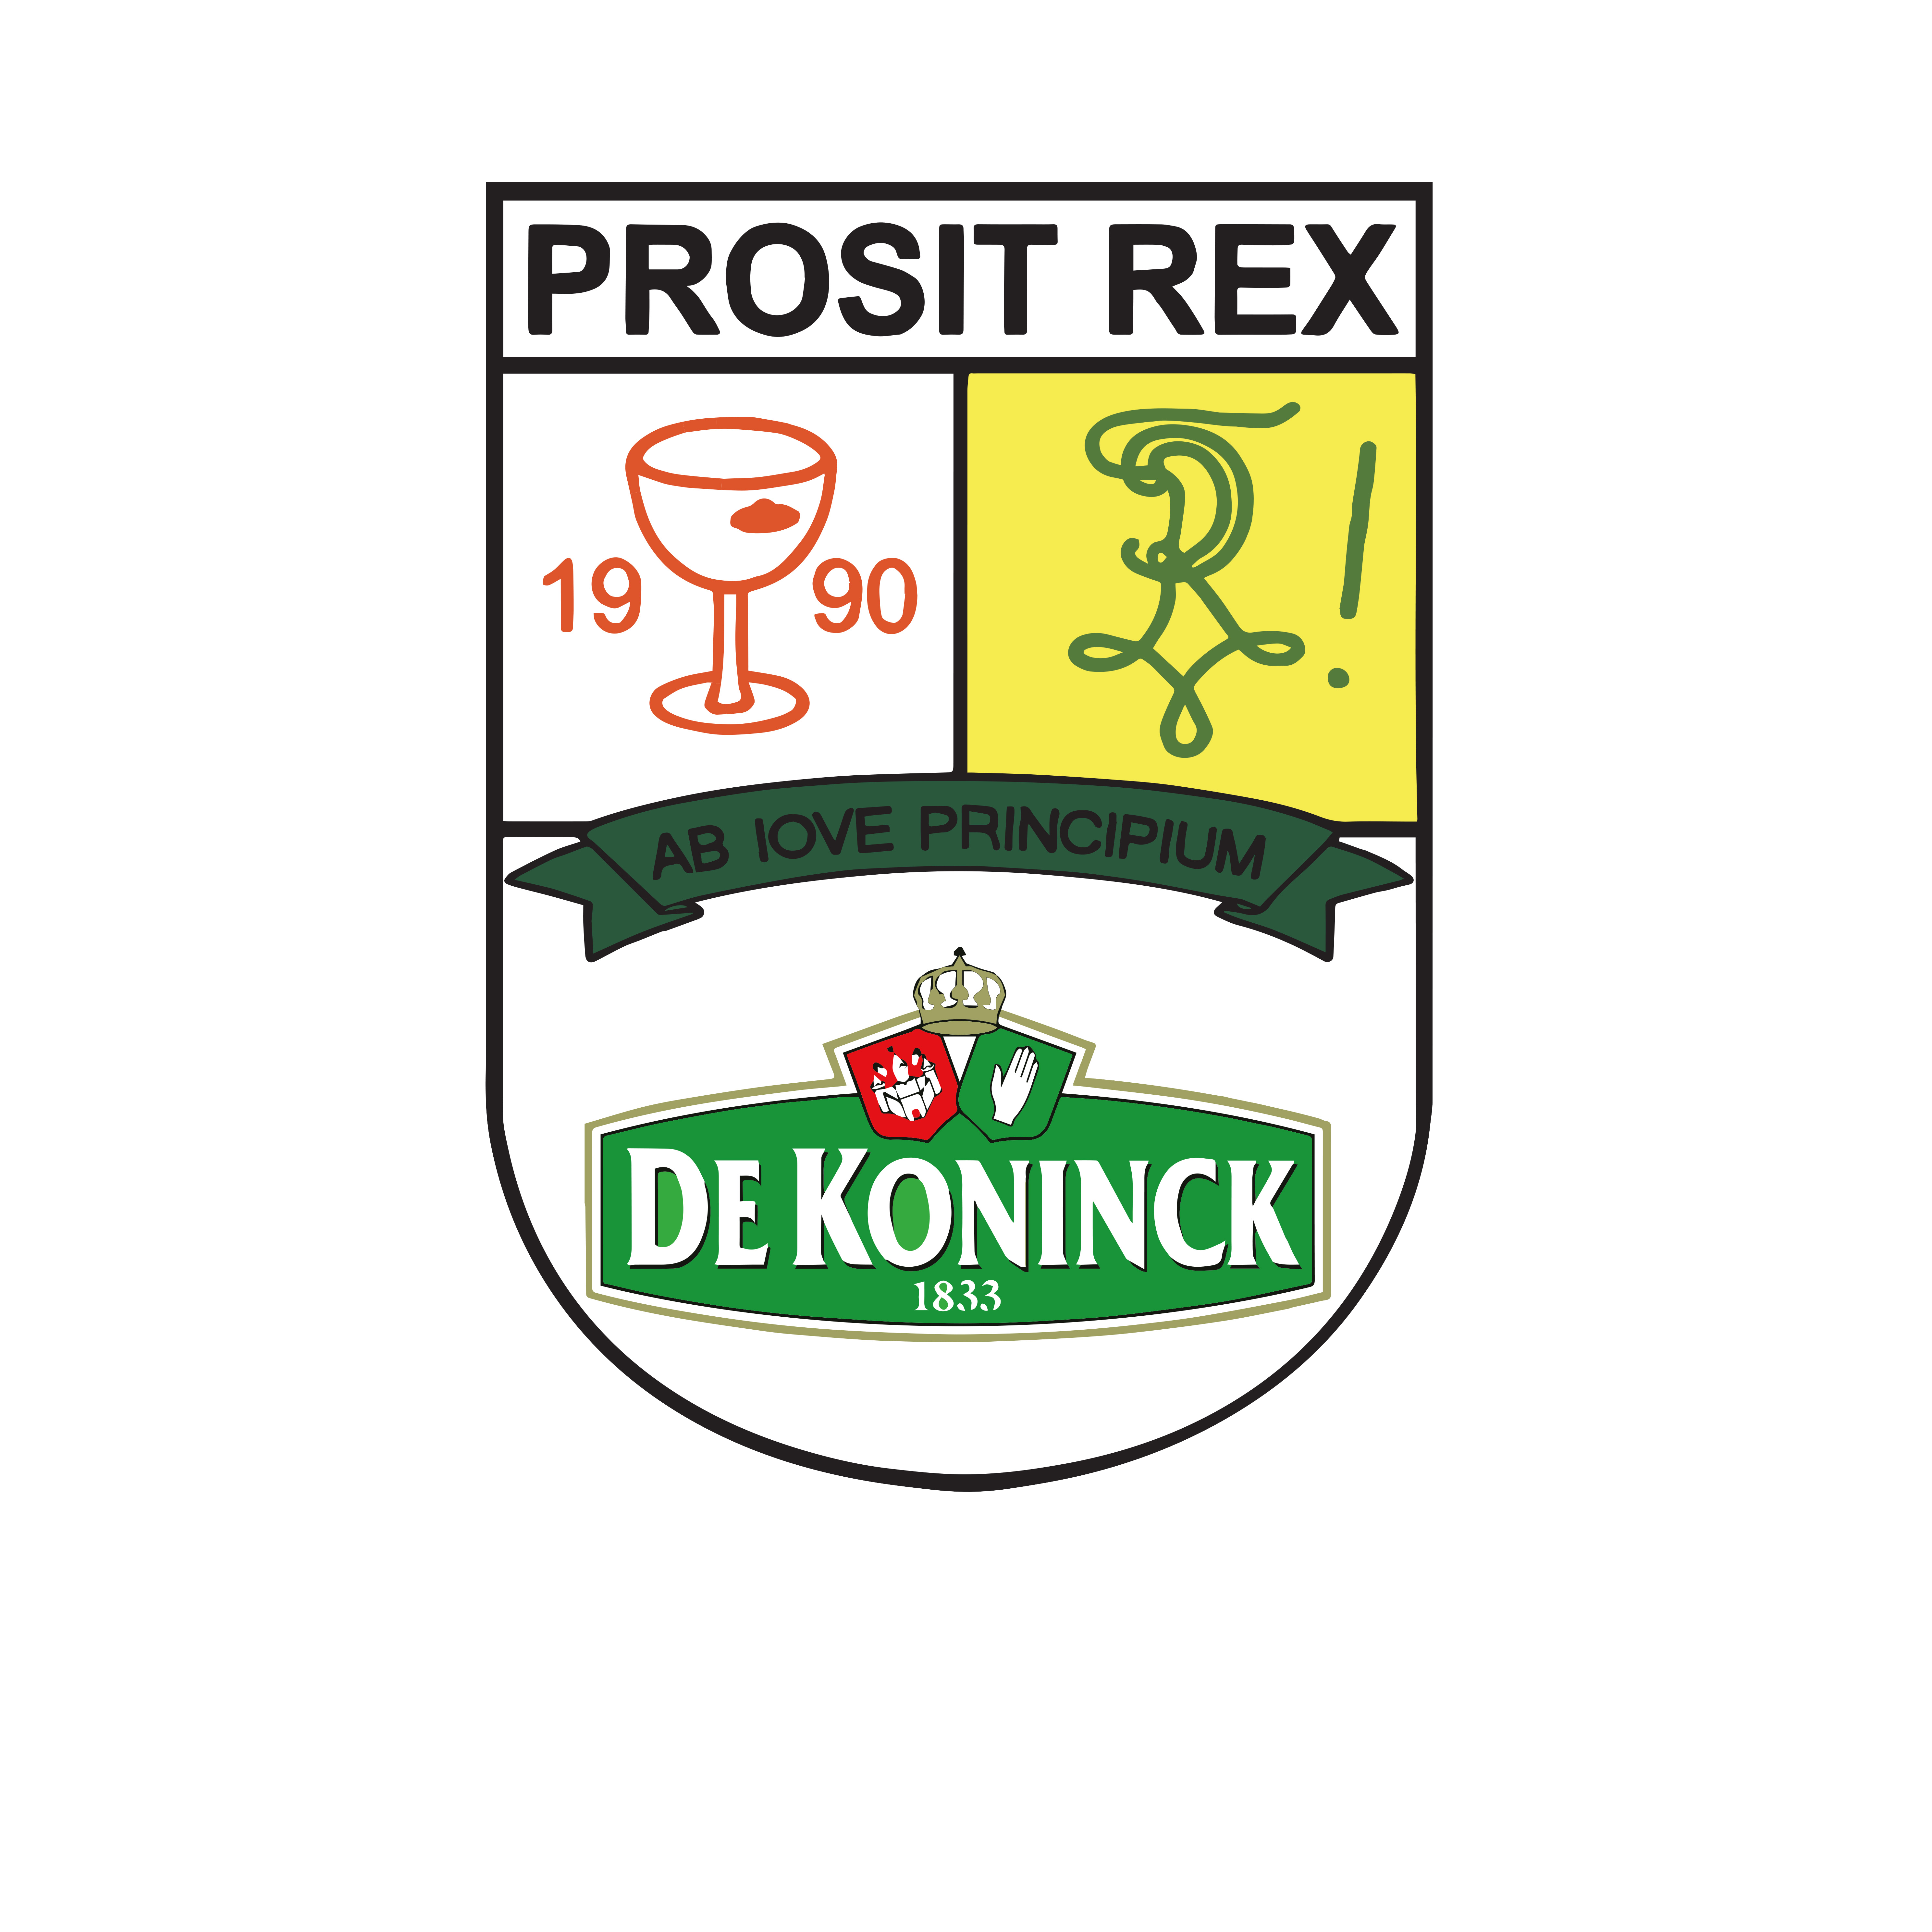 Prosit Rex Antwerpen